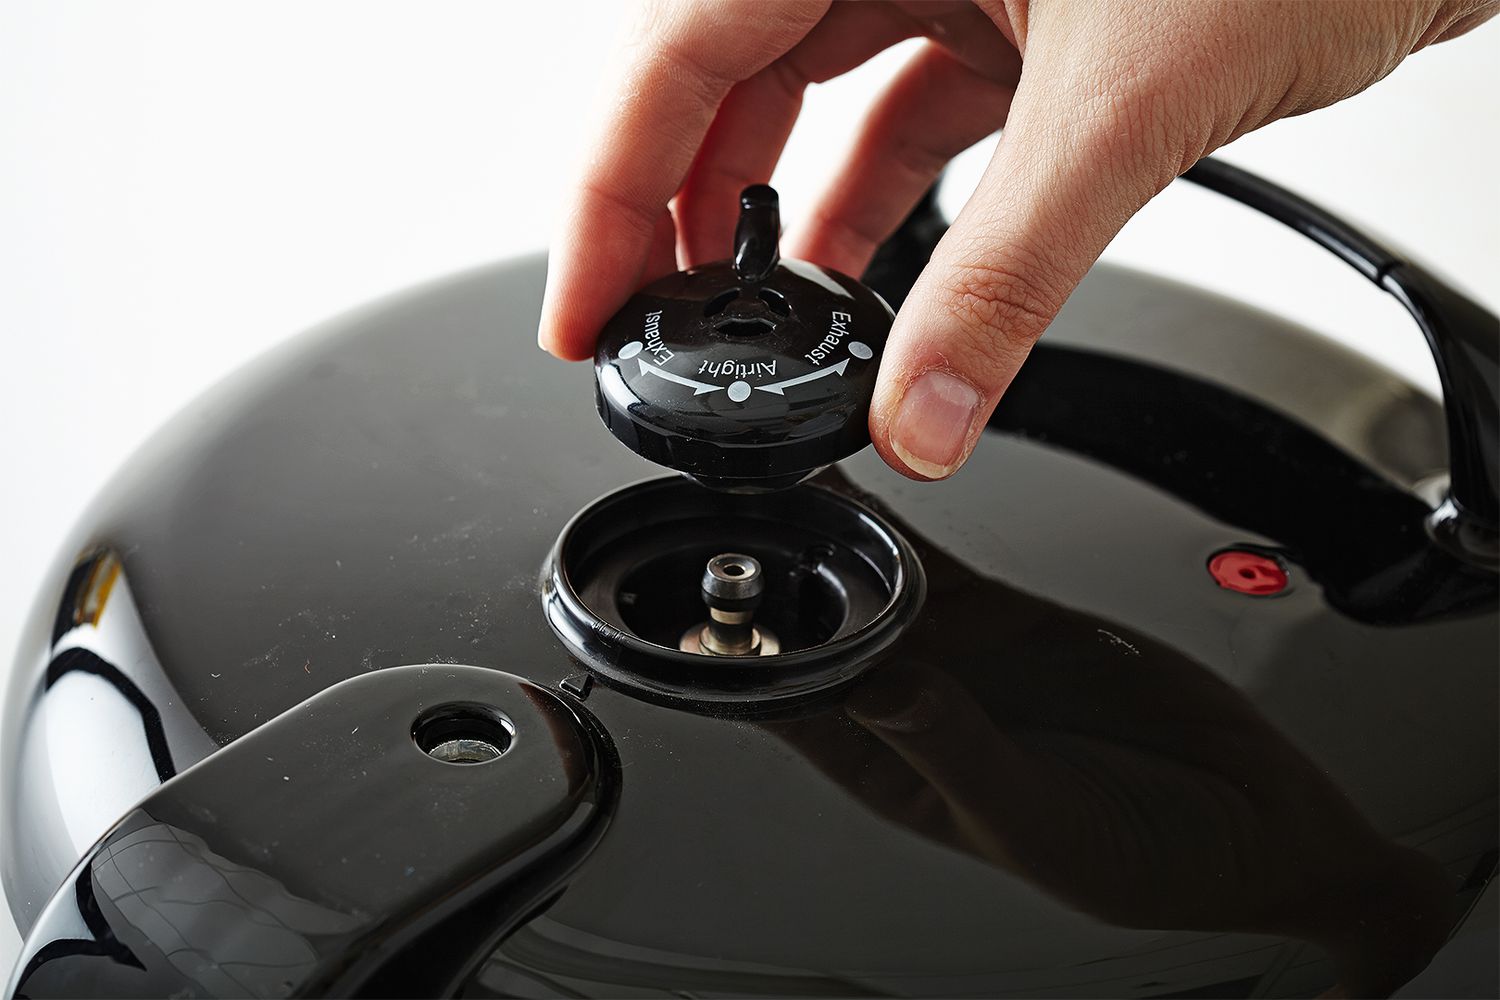 Pressure valve on black pressure cooker hand